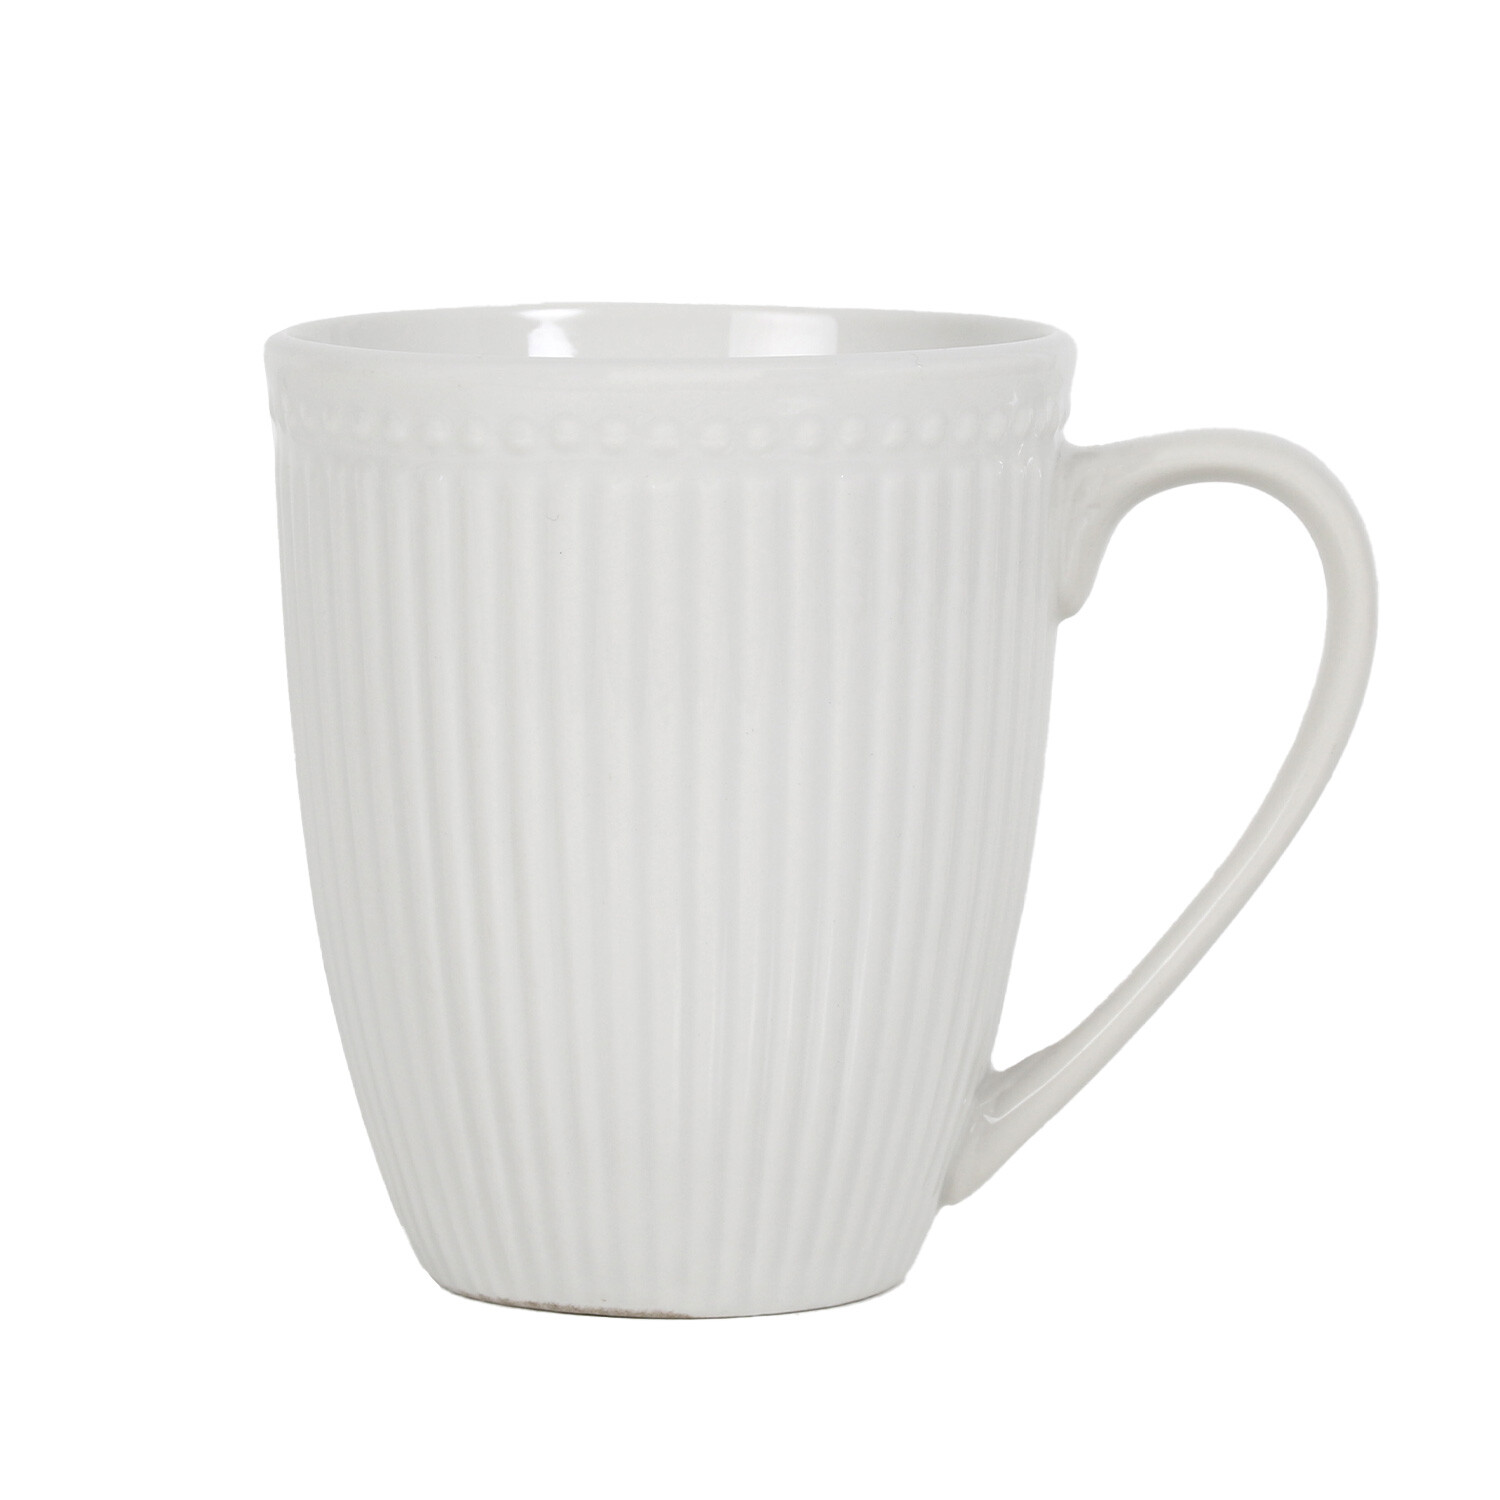 Embossed Porcelain Mug - White Image